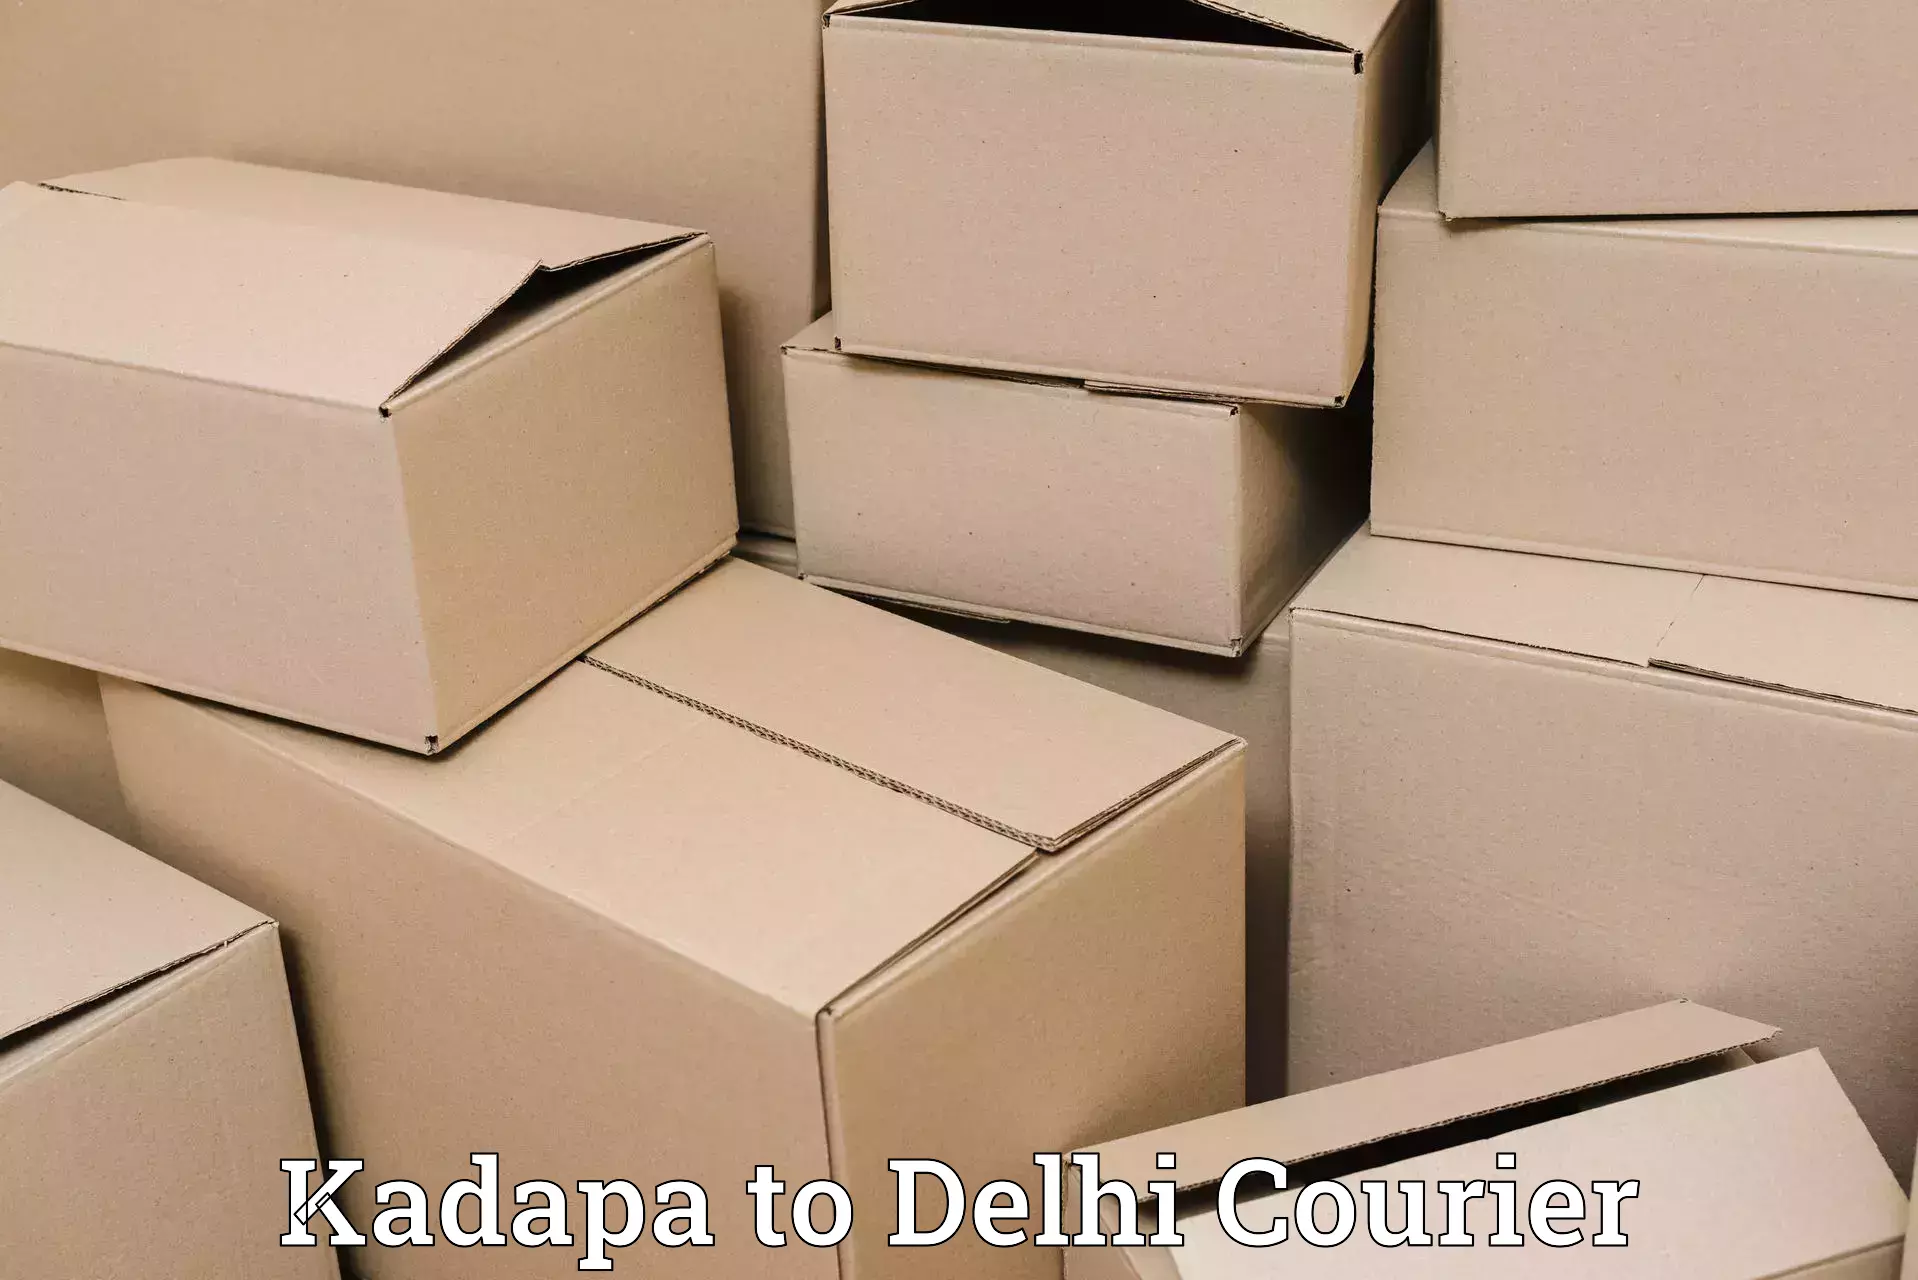 Enhanced tracking features Kadapa to Lodhi Road